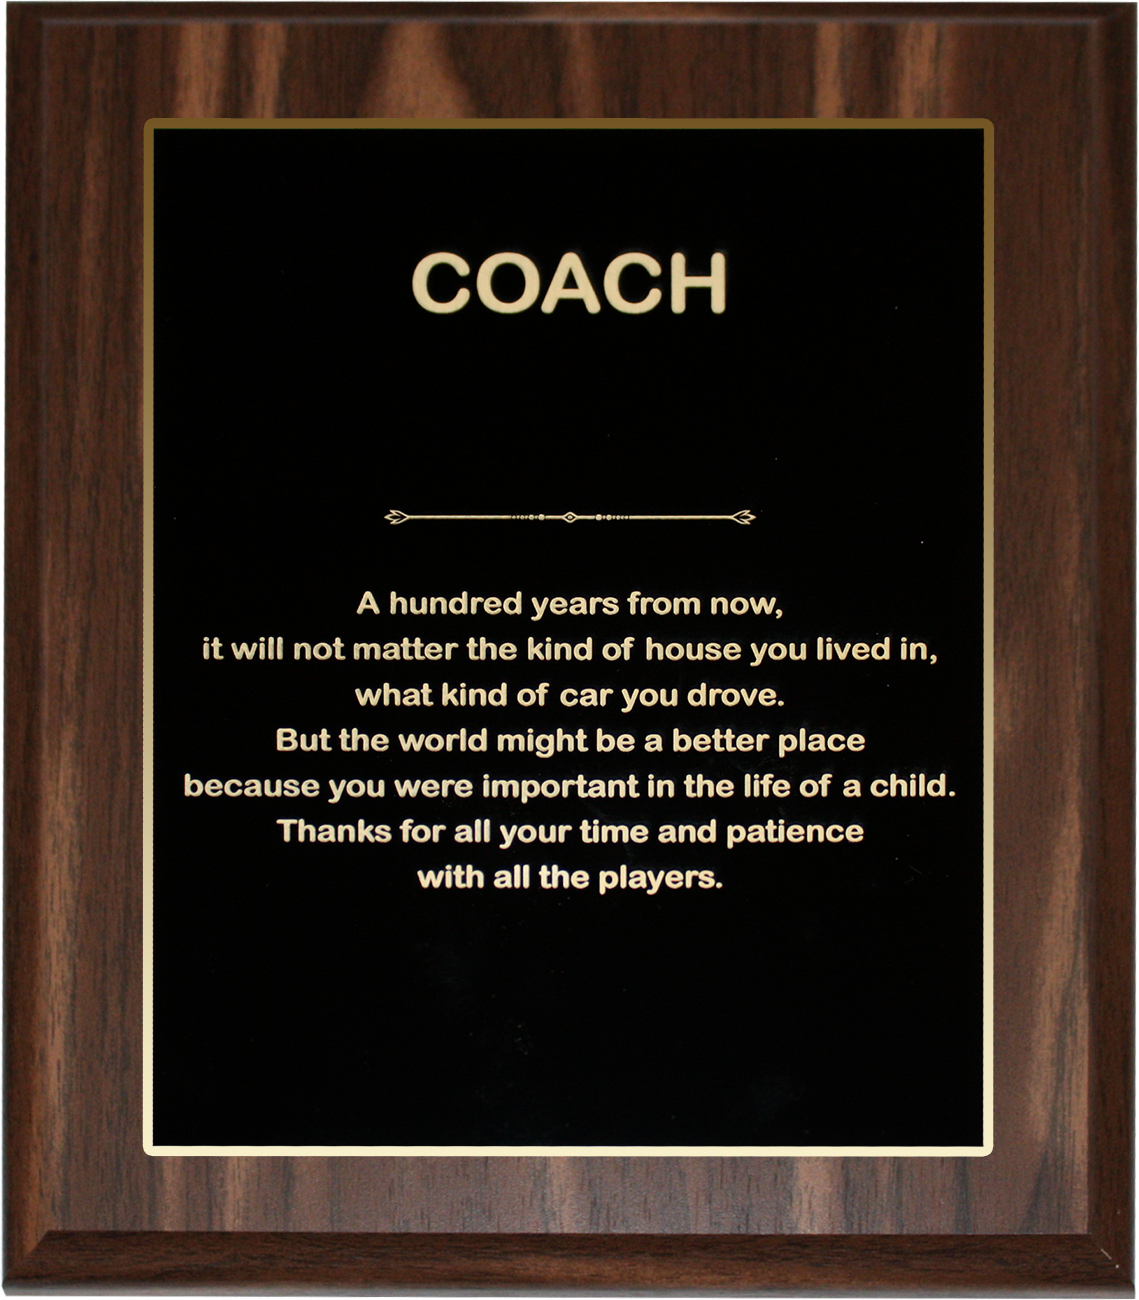 Coach Award Plaque Template - Vegas Trophies for Running Certificate Templates 7 Fun Sports Designs